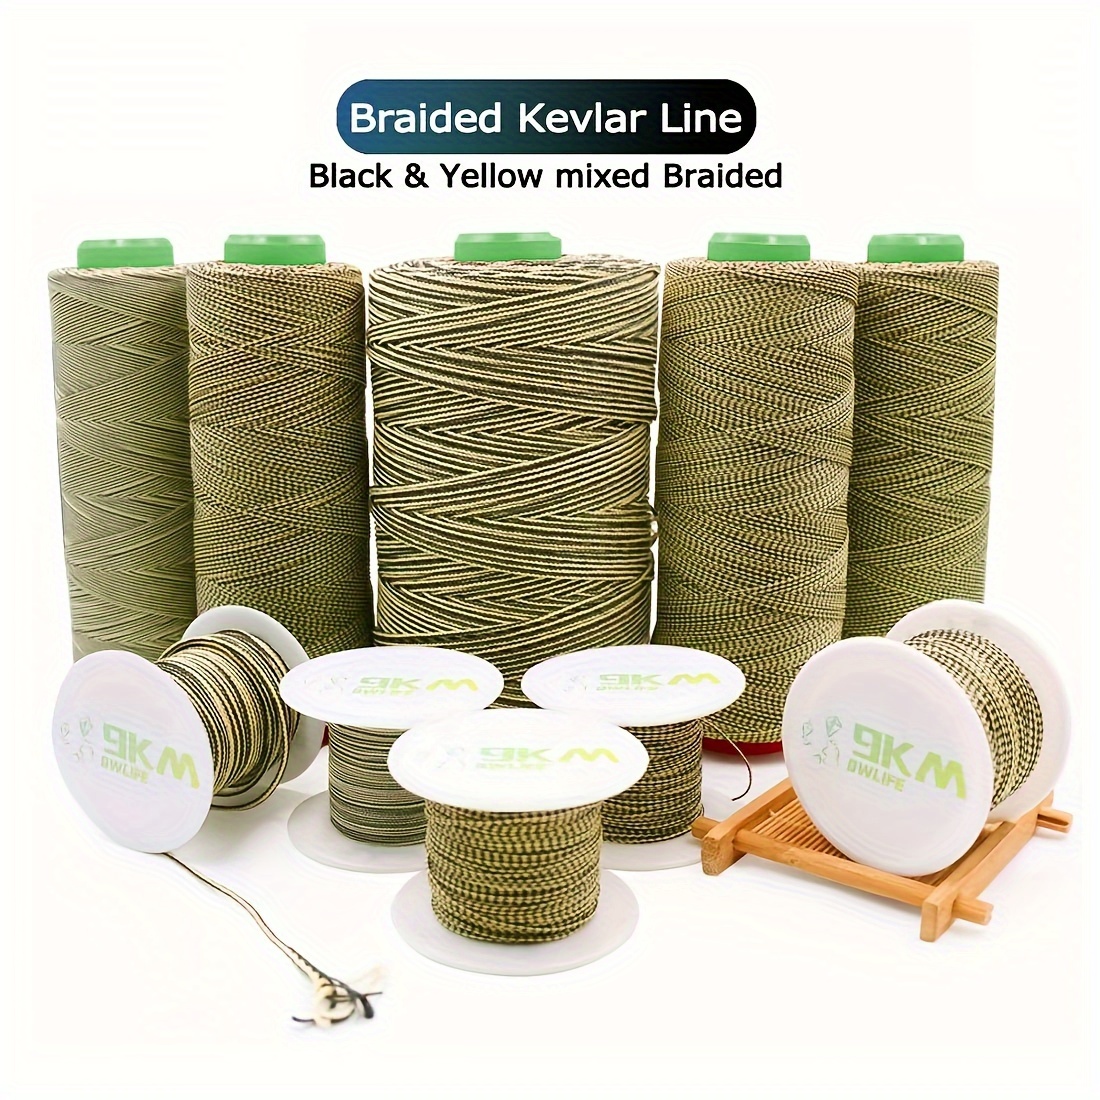 Braided Kevlar Line Fishing Assist Line Kite String Made with Kevlar  40lb-1500lb